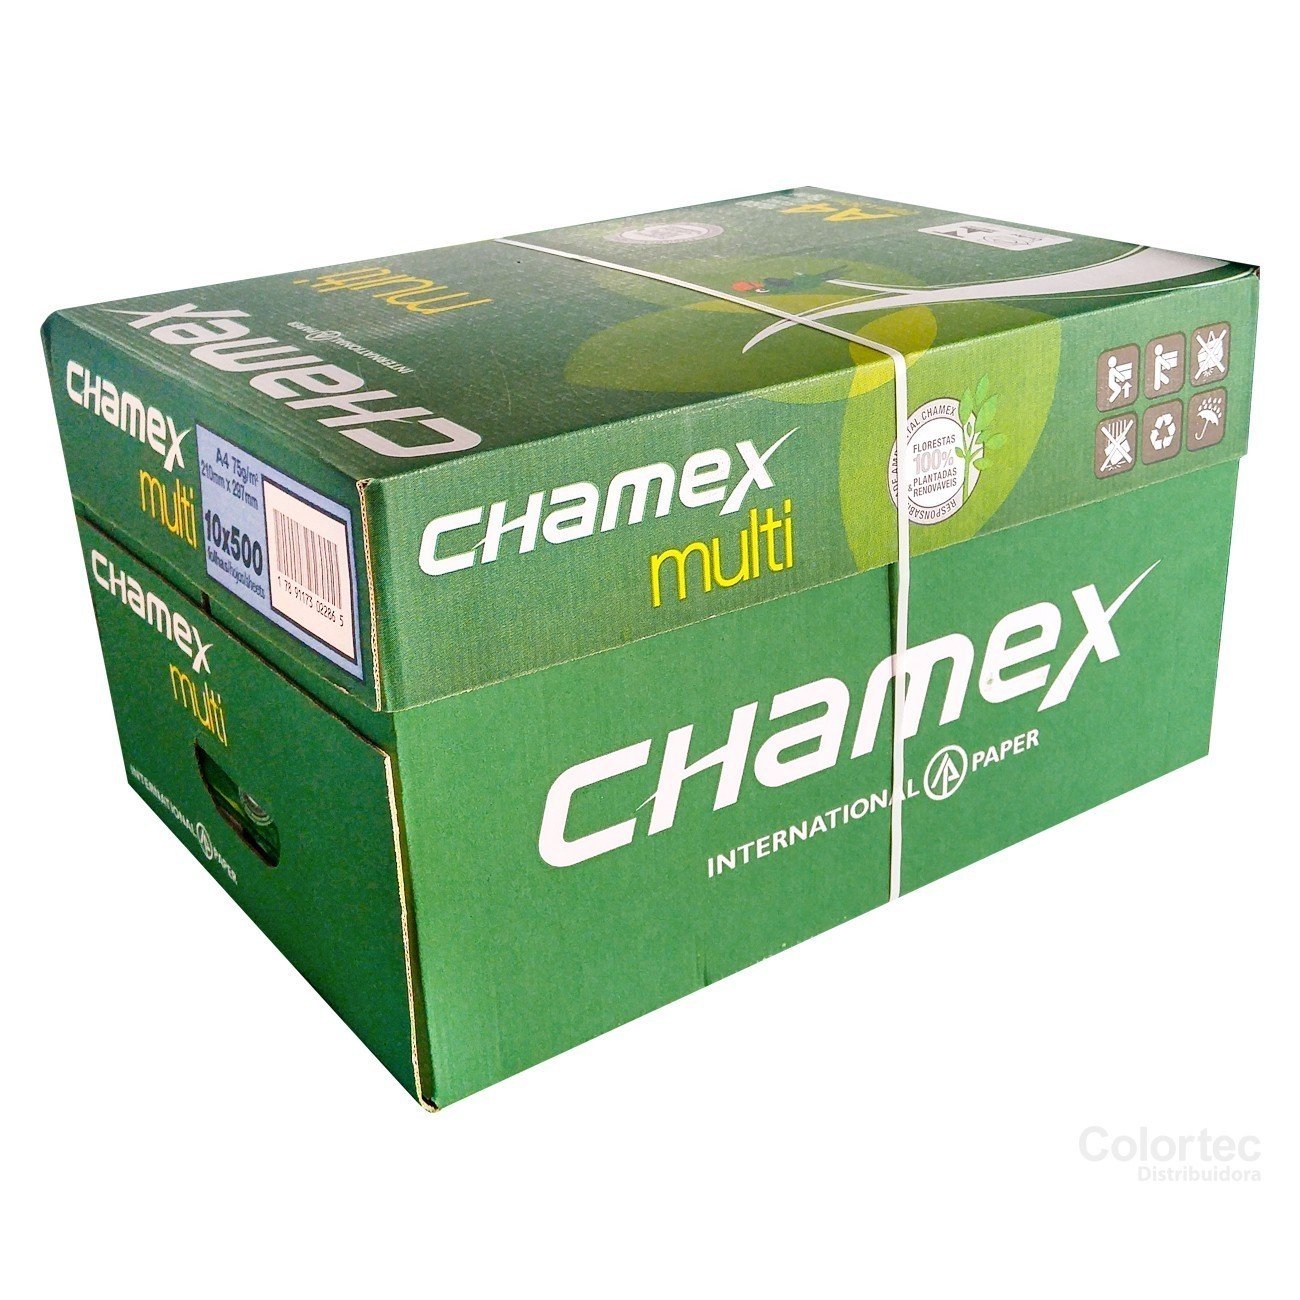 Xerox Chamex Navigator Photocopy Printing A4 Copy Paper 80gsm